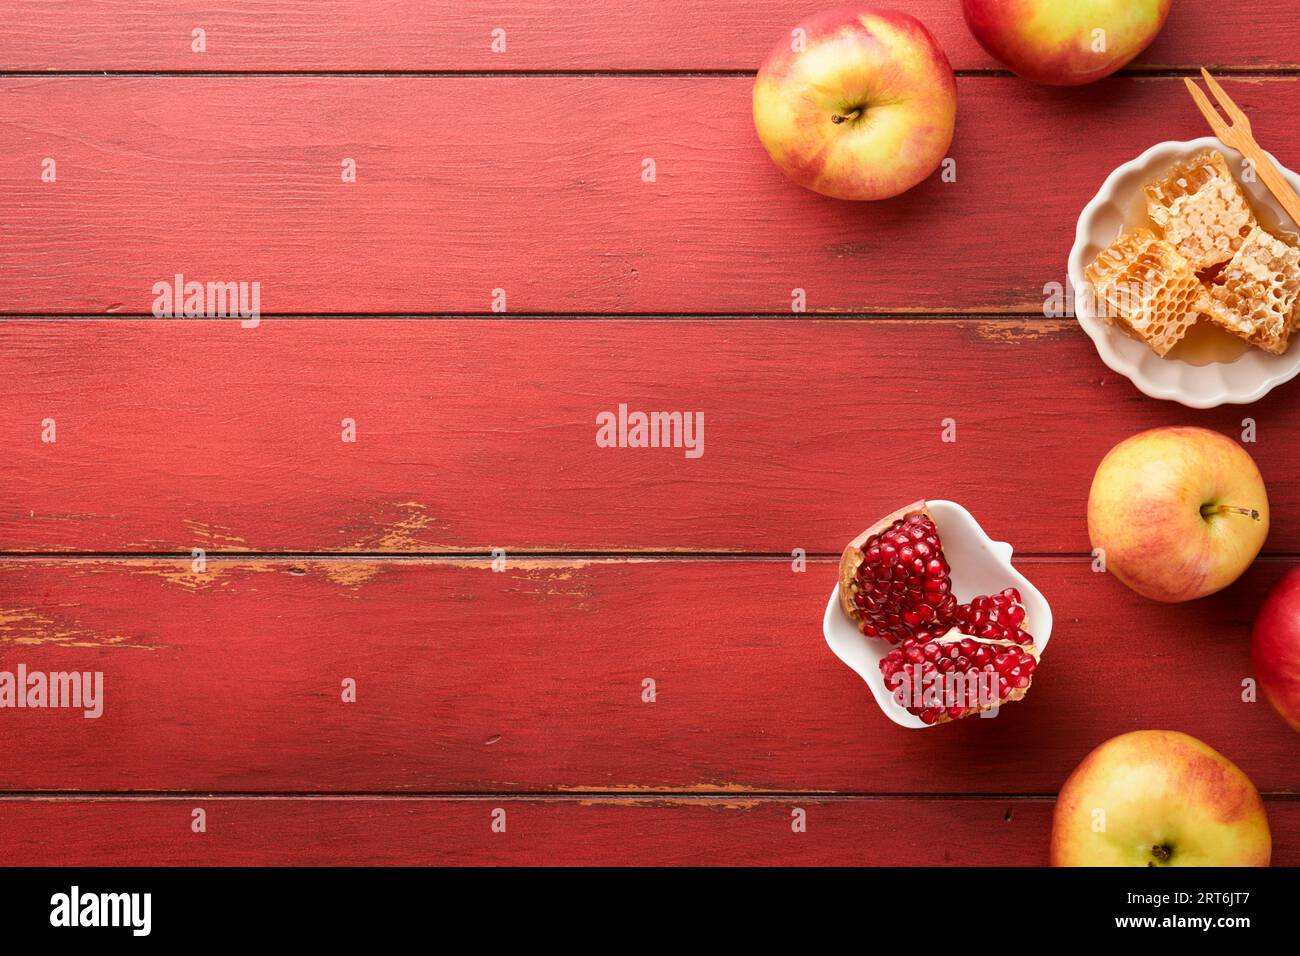 Jewish Holidays - Rosh Hashanah or Rosh Hashana. Pomegranate, apples, honey and round challah on  old wooden red table background. Jewish Autumn celeb Stock Photo